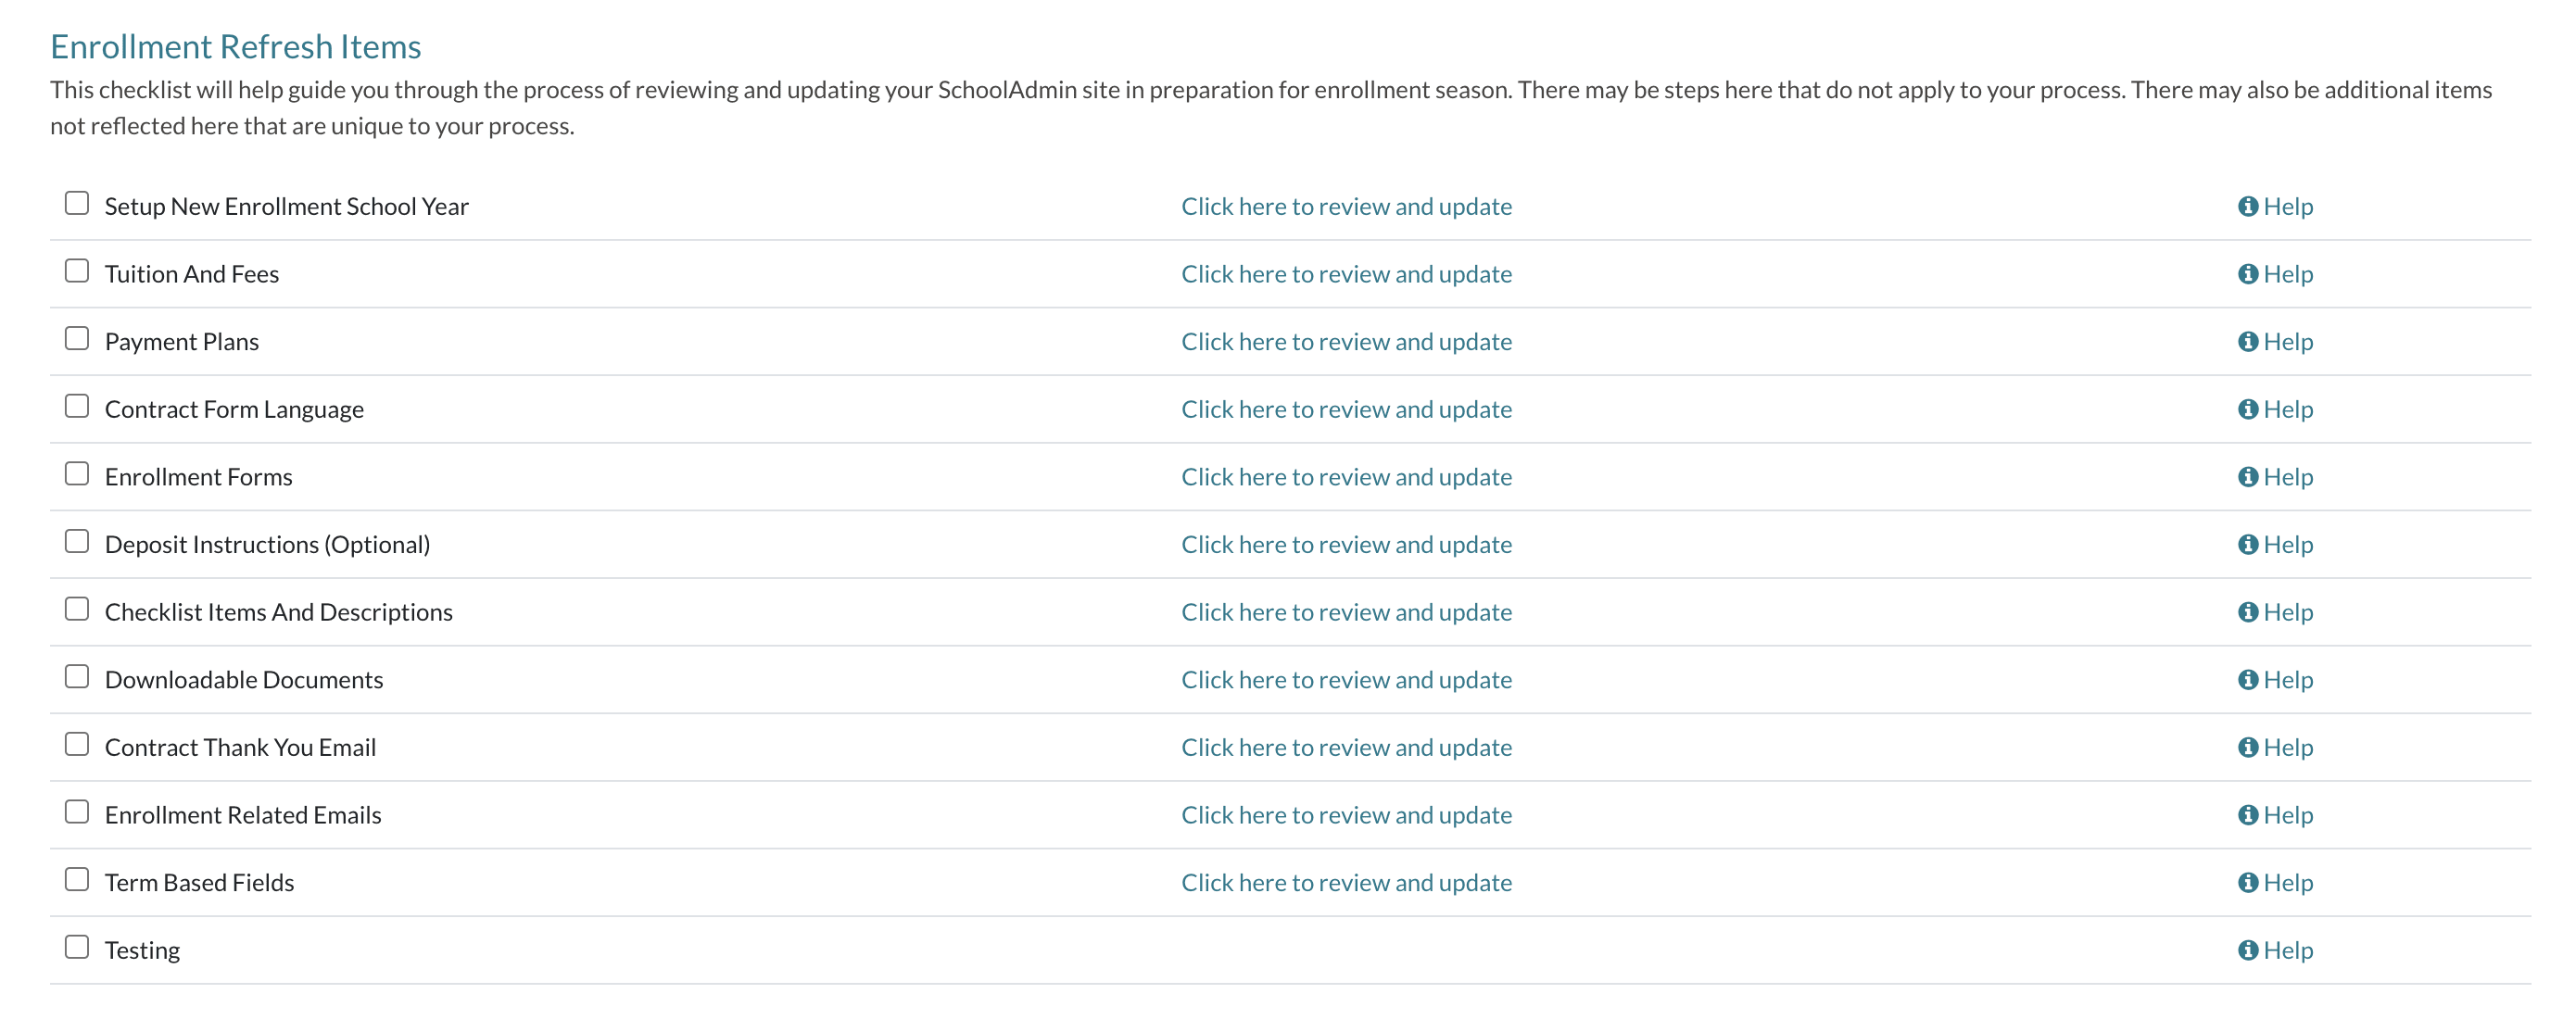 image of the Enrollment Refresh Checklist